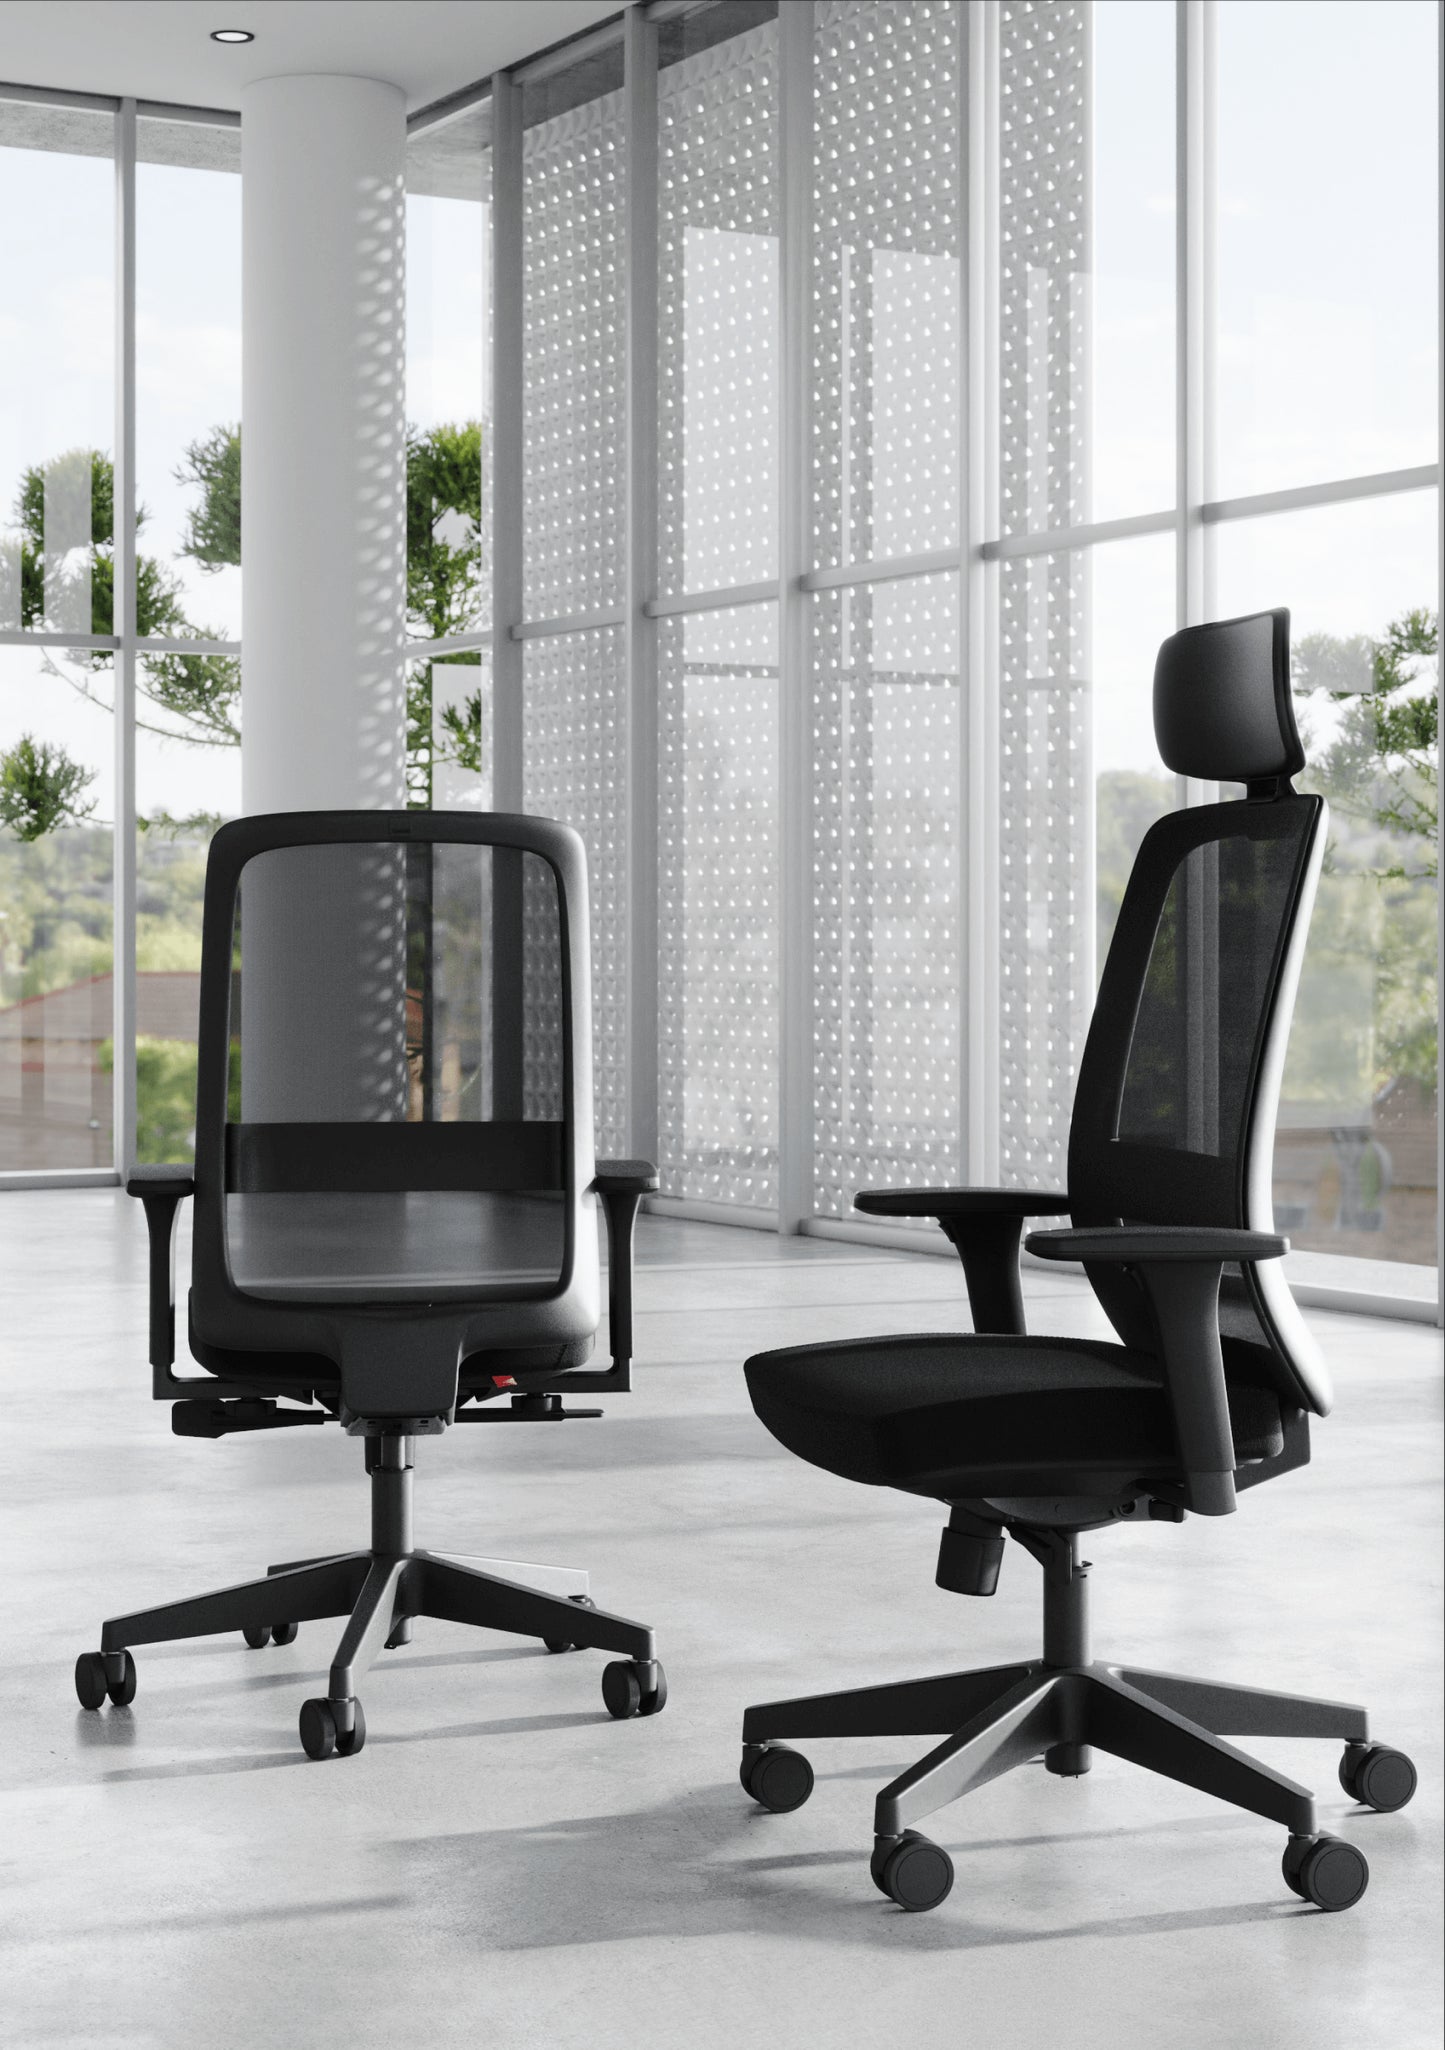 Vida Ergonomic Mesh-Back Office Chair